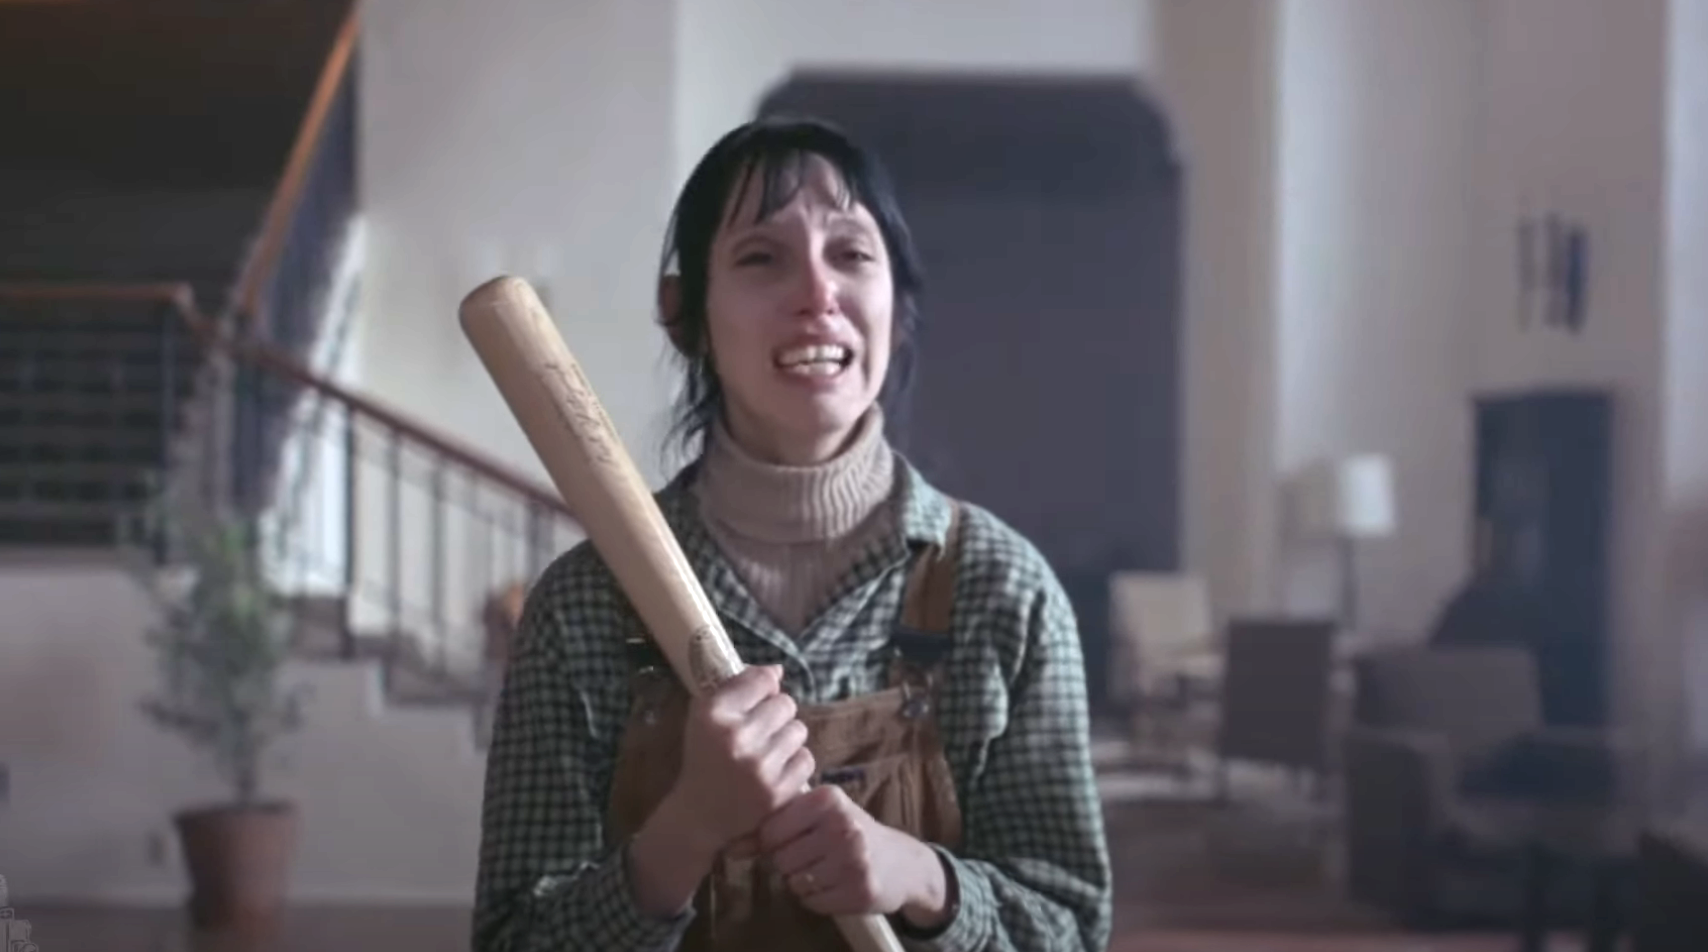 Shelley holding a baseball bat and looking distraught